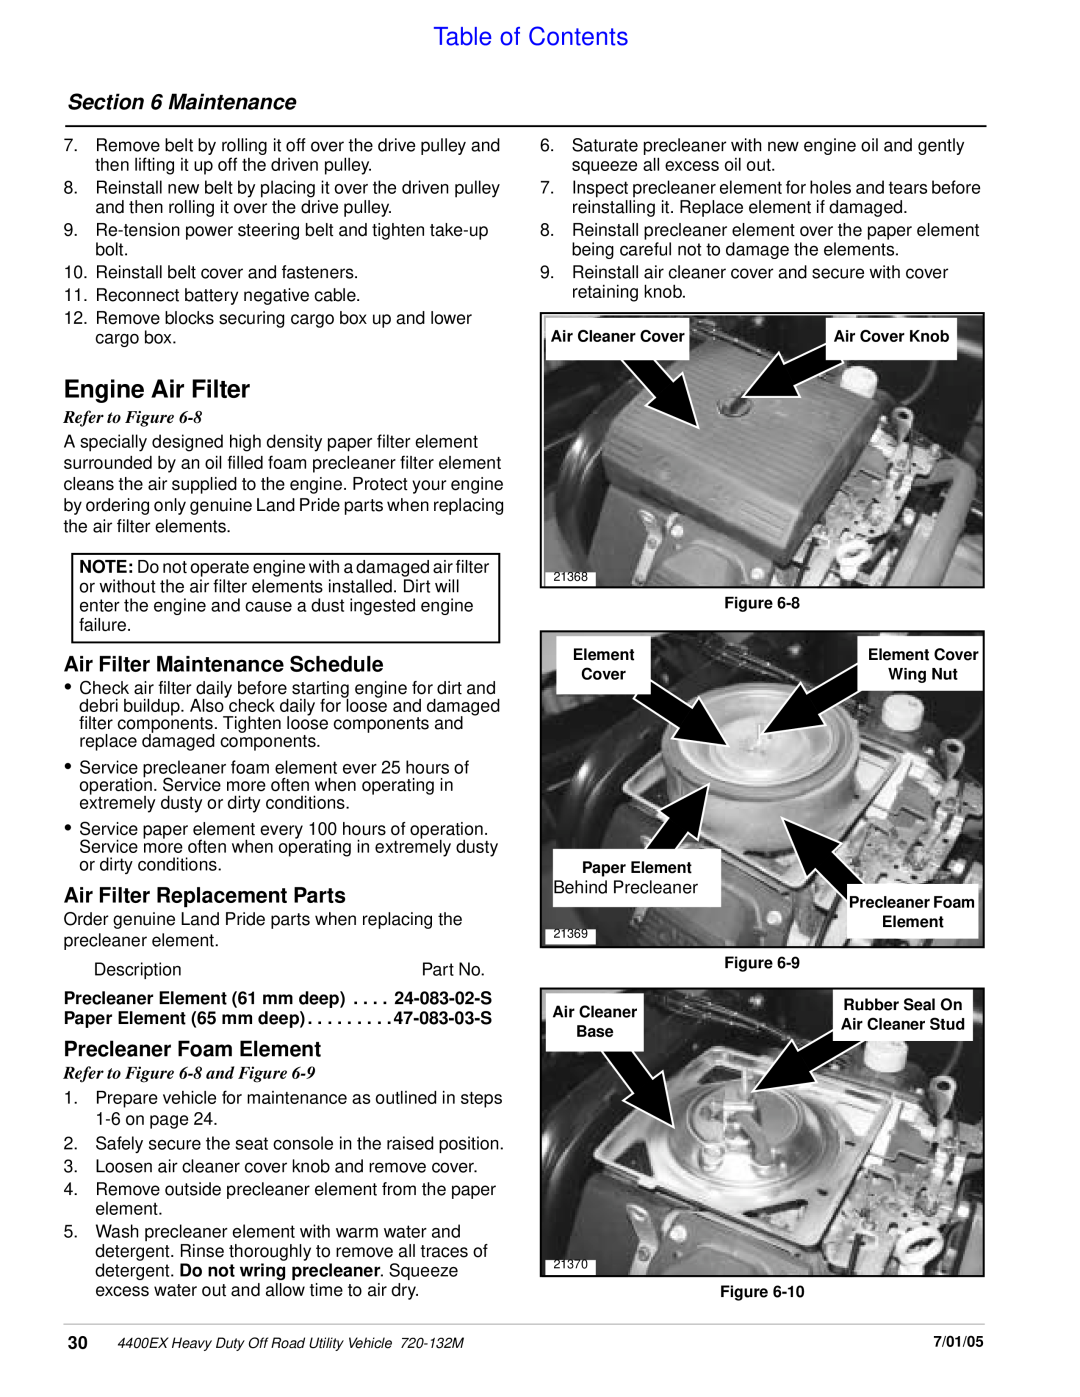 Land Pride 22081 Engine Air Filter, Air Filter Maintenance Schedule, Air Filter Replacement Parts, Precleaner Foam Element 